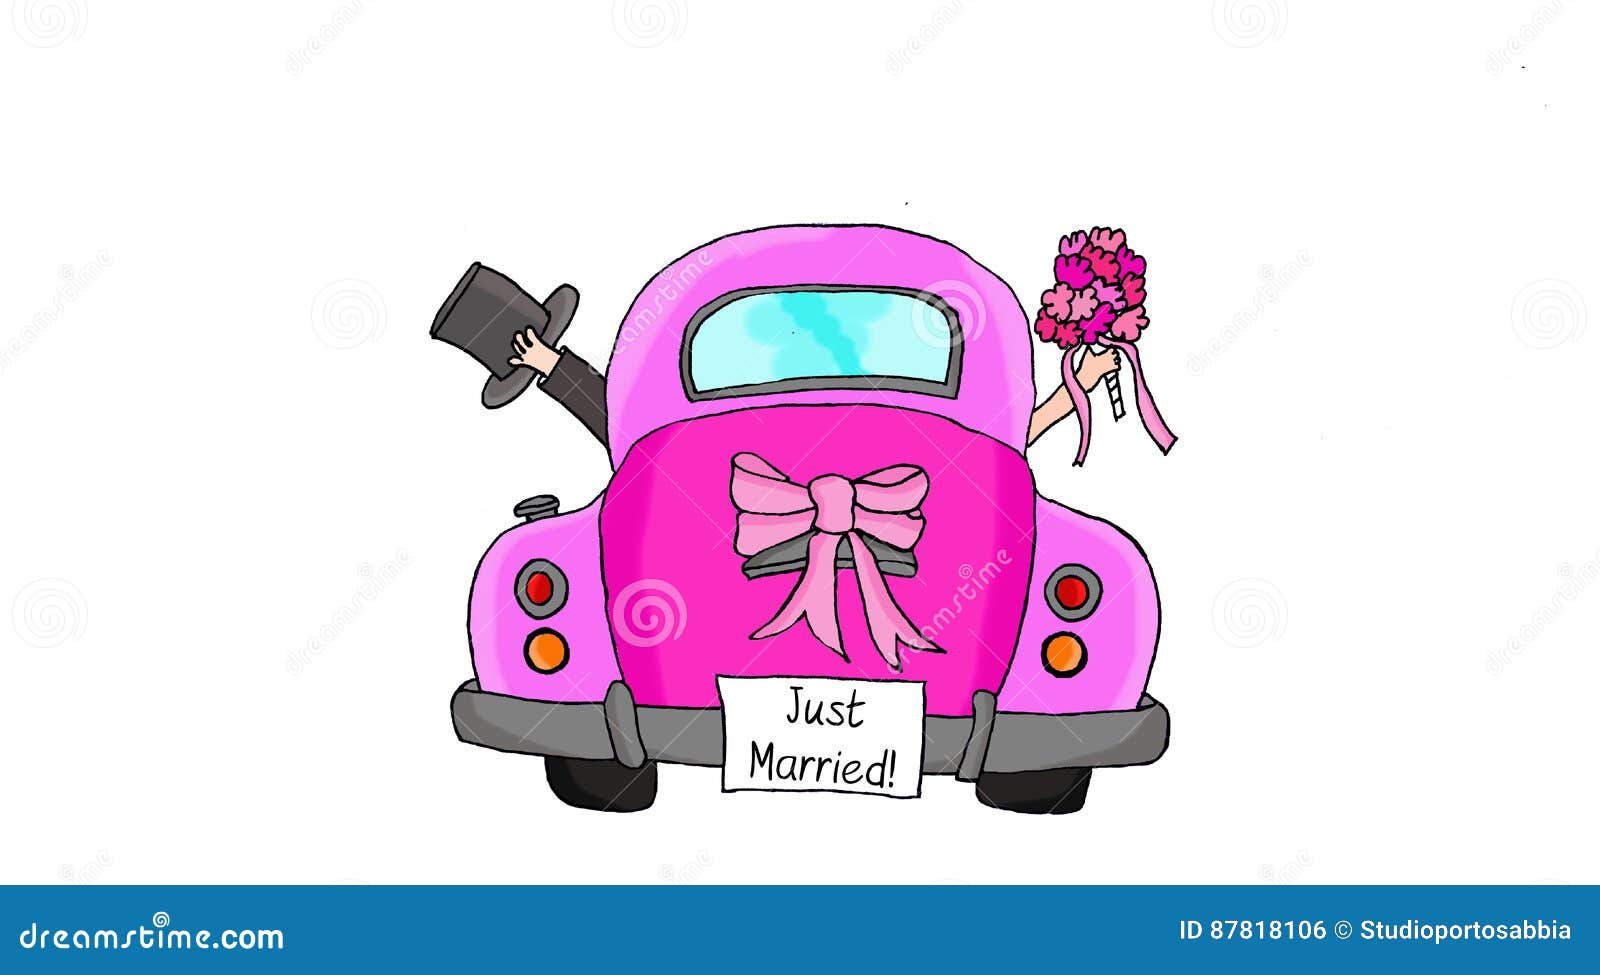 https://thumbs.dreamstime.com/z/just-married-couple-pink-car-bride-groom-sign-87818106.jpg